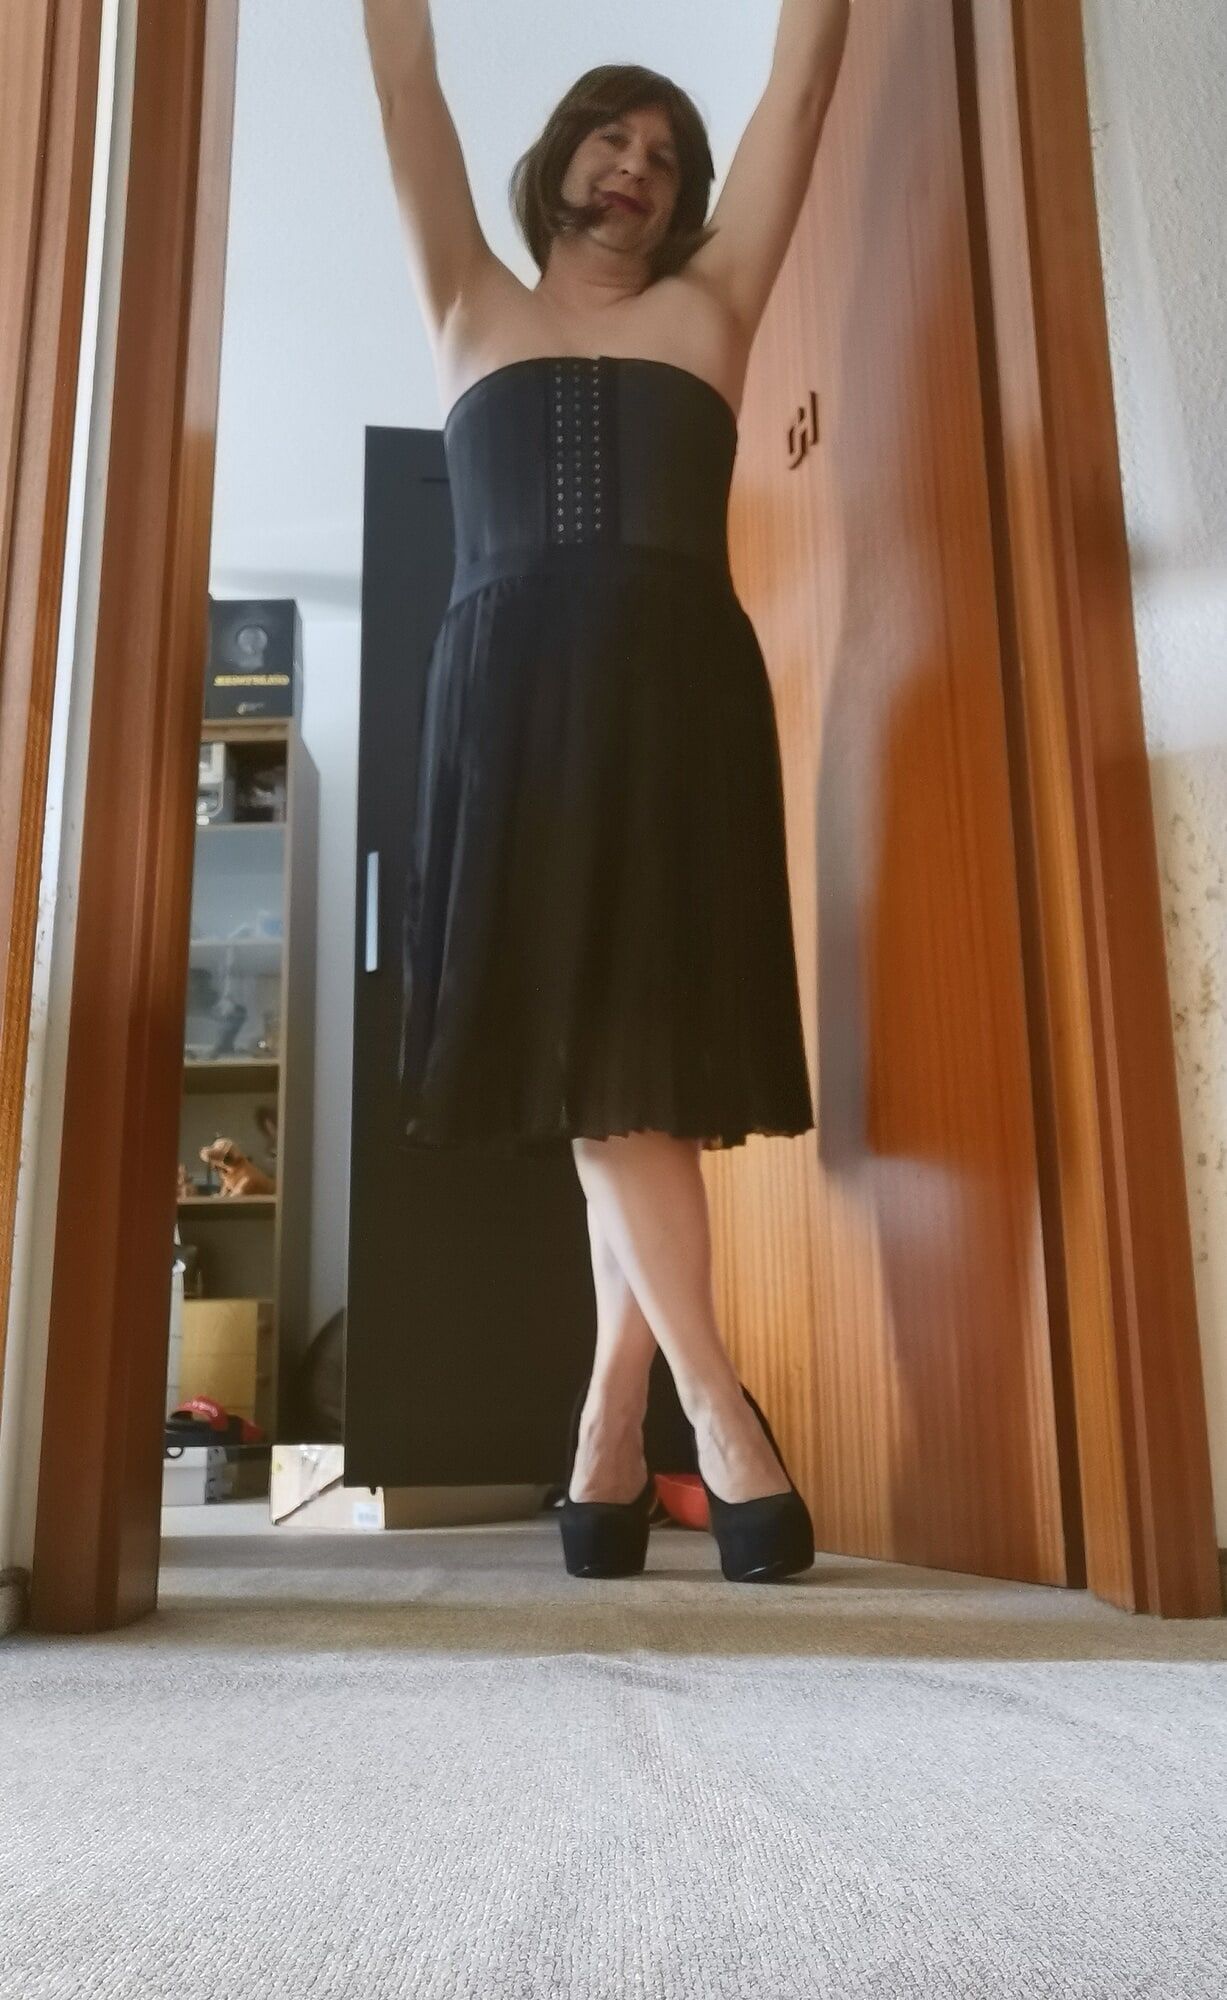 Posing Sexy Wearing Black Skirt, Platform Heels And Wig #7